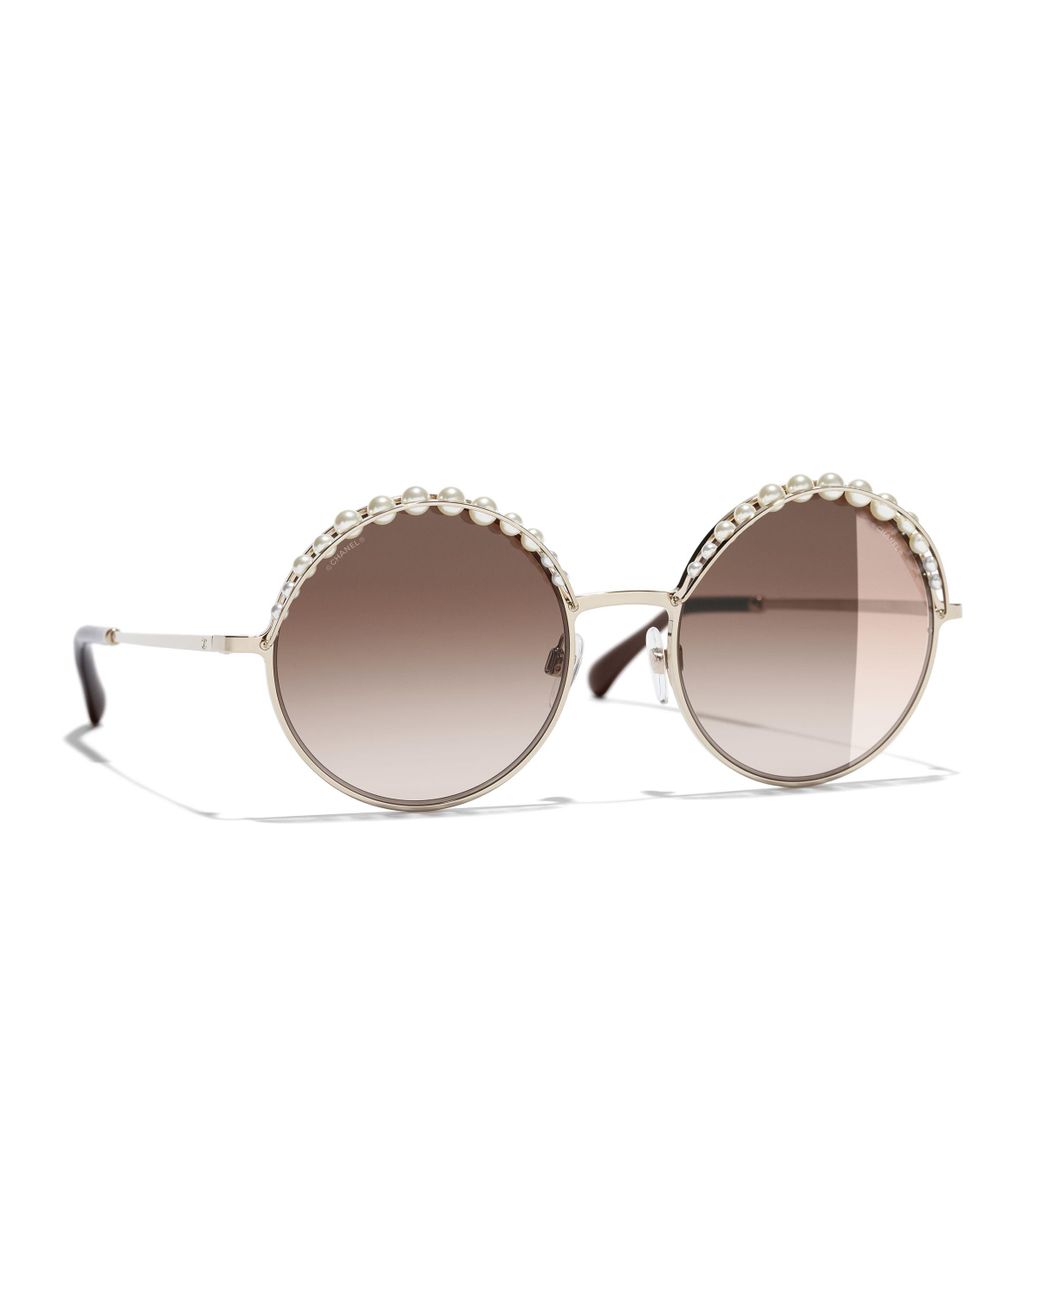 Chanel Round Sunglasses Ch4245 Gunmetal/grey